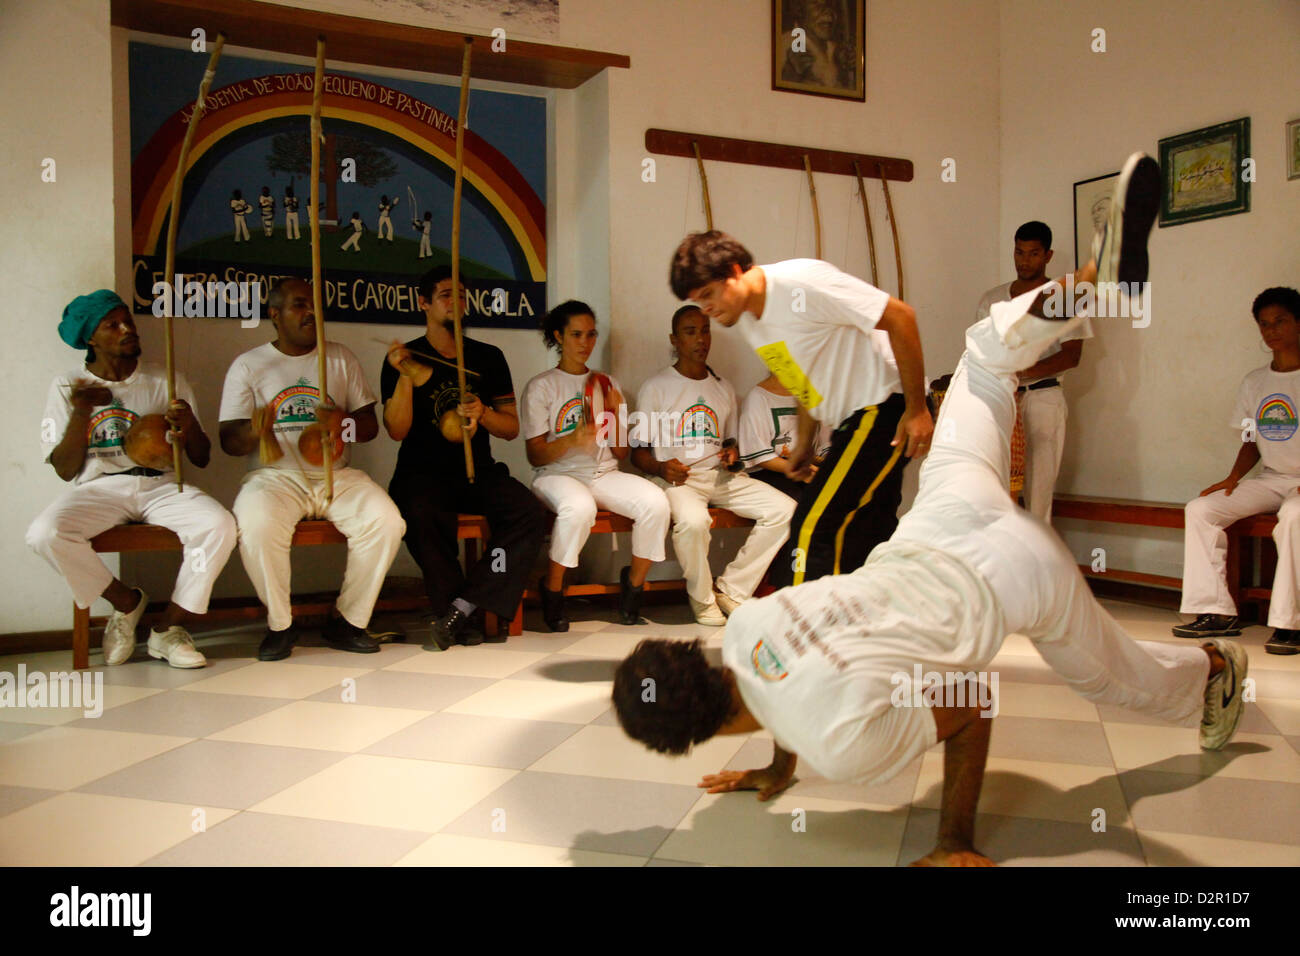 Capoeira class, Salvador (Salvador de Bahia), Bahia, Brazil, South America Stock Photo